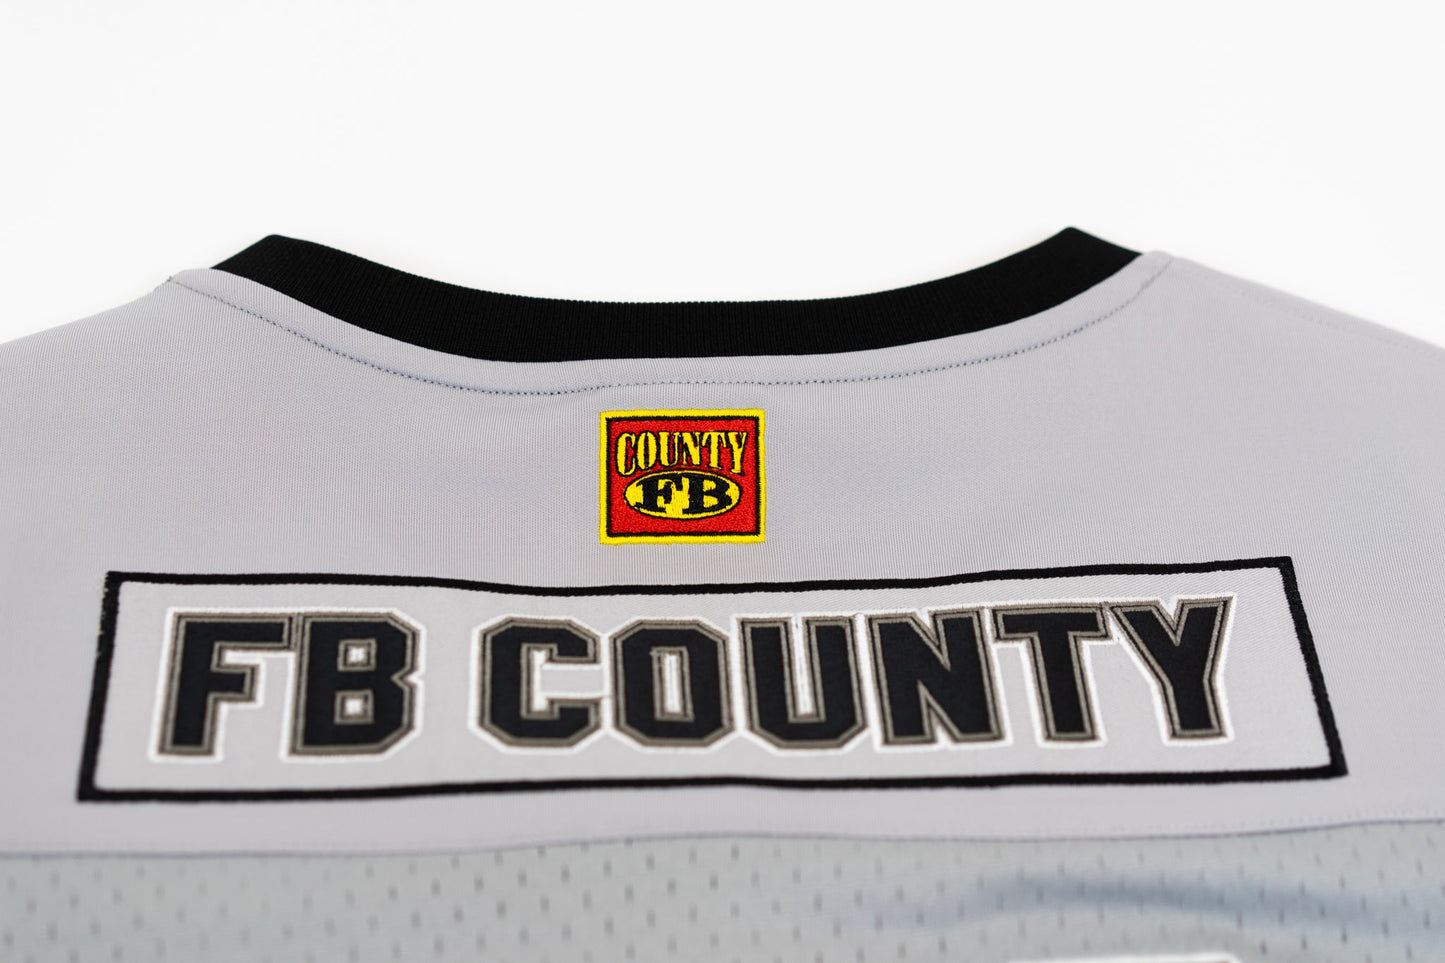 FB County Womens Football Classic Signature Jersey